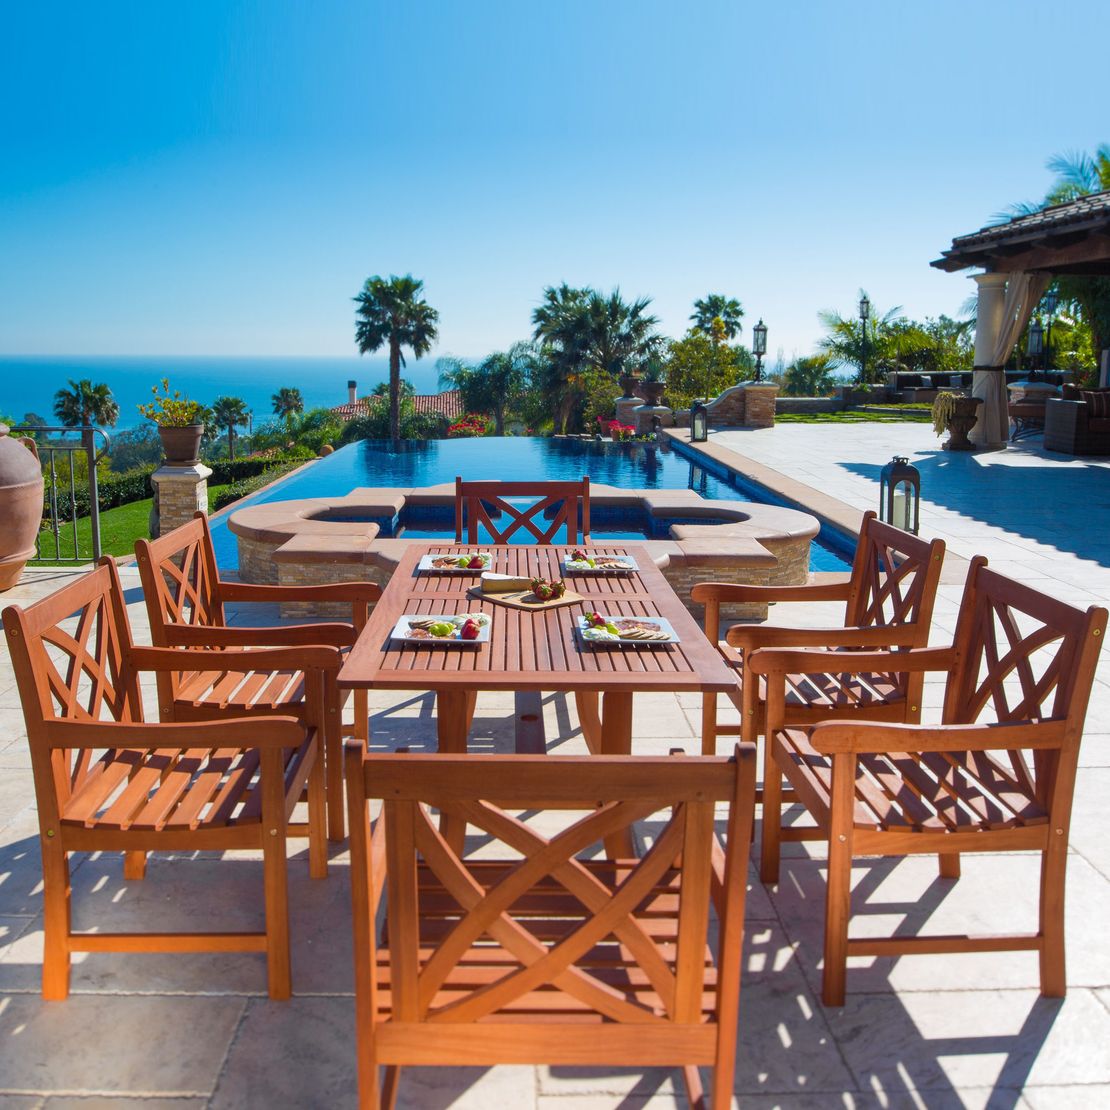 Malibu Outdoor 7-piece Wood Patio Dining Set with Curvy Leg Table